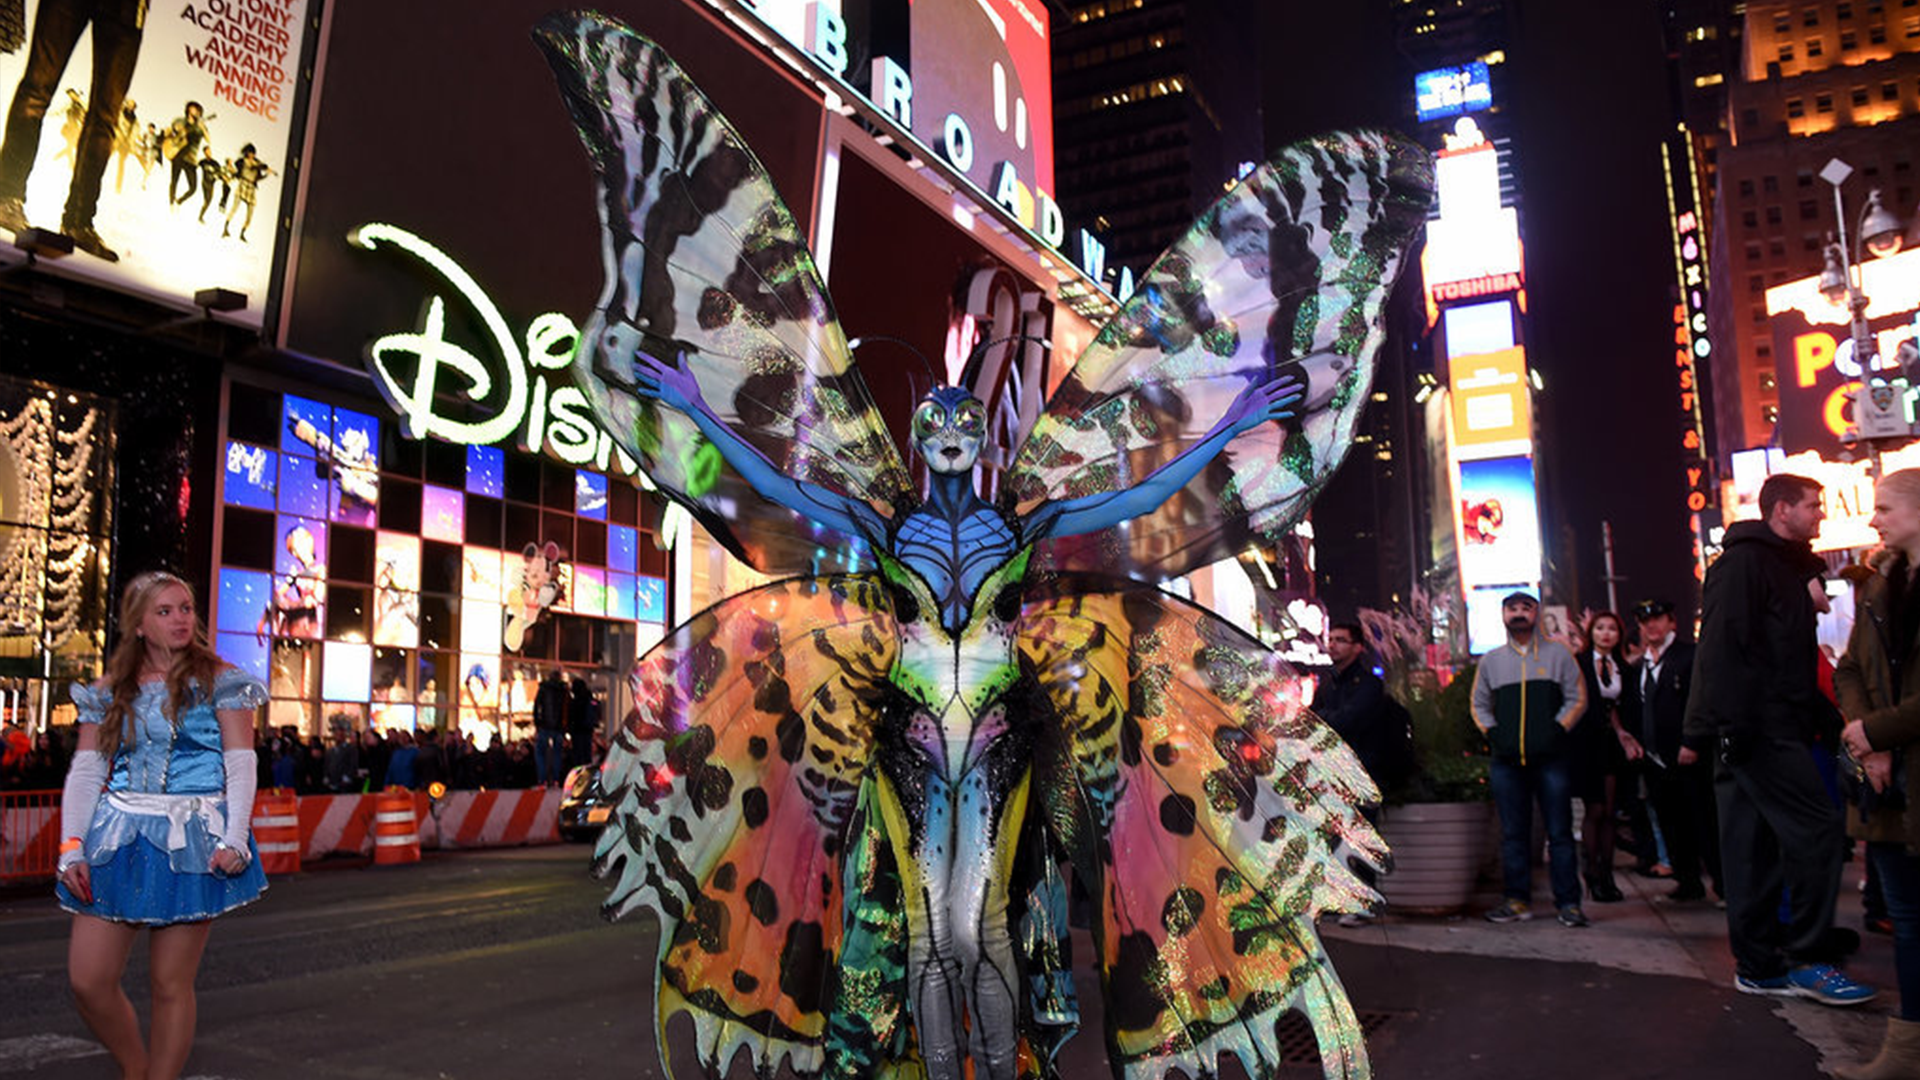 Heidi Klum In Butterfly Costume